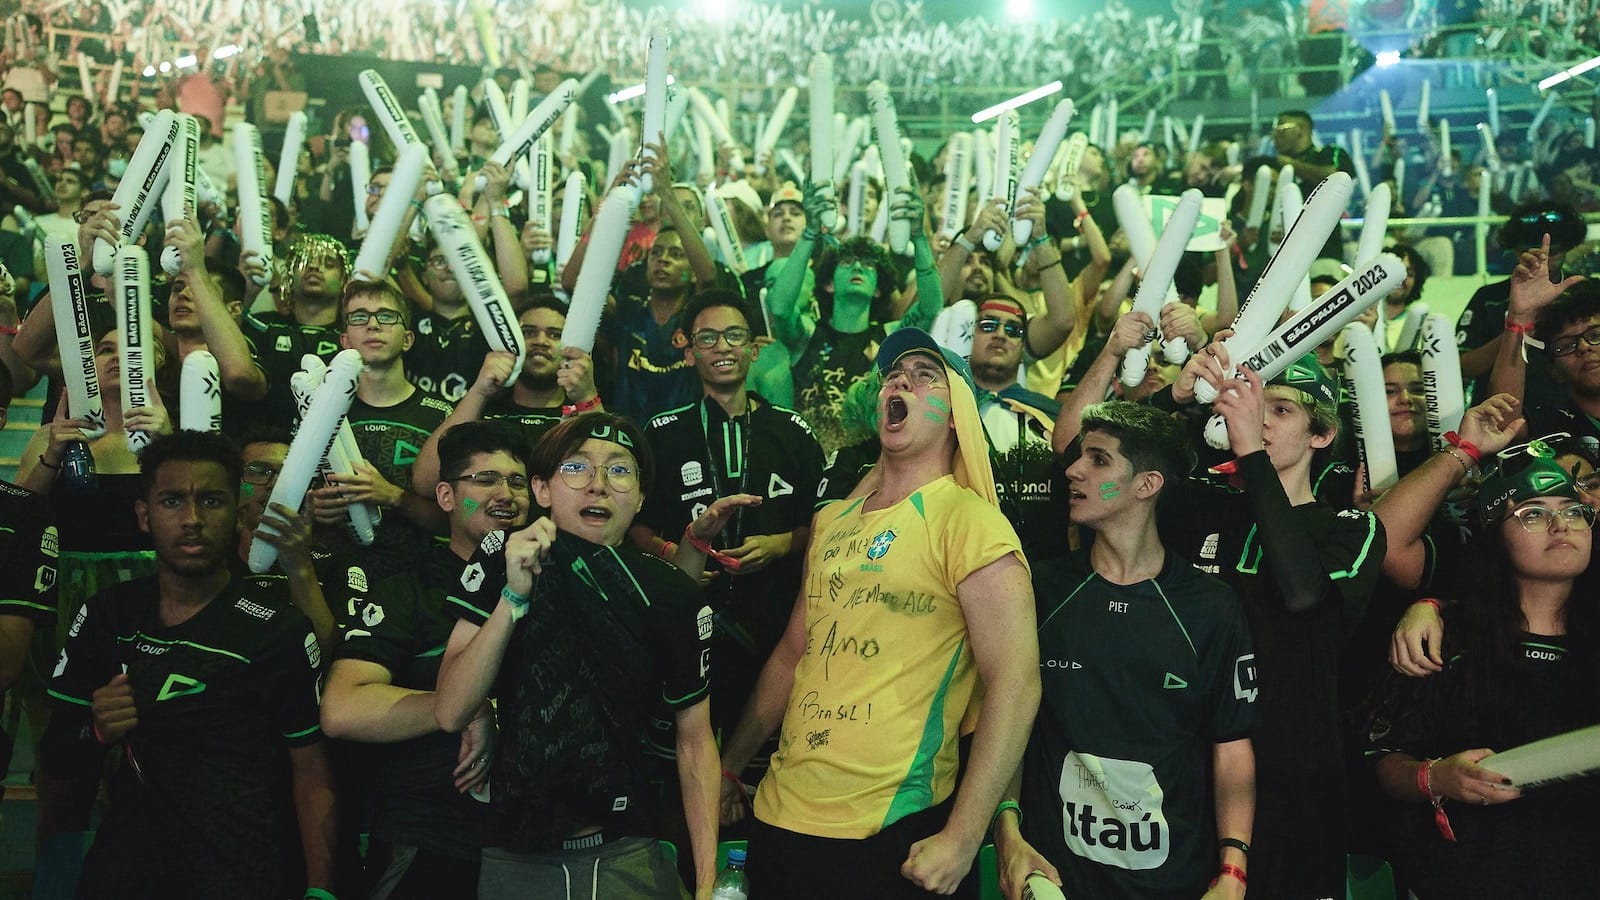 VCT LOCK//IN: MIBR's jzz talks home advantage with Brazilian crowd